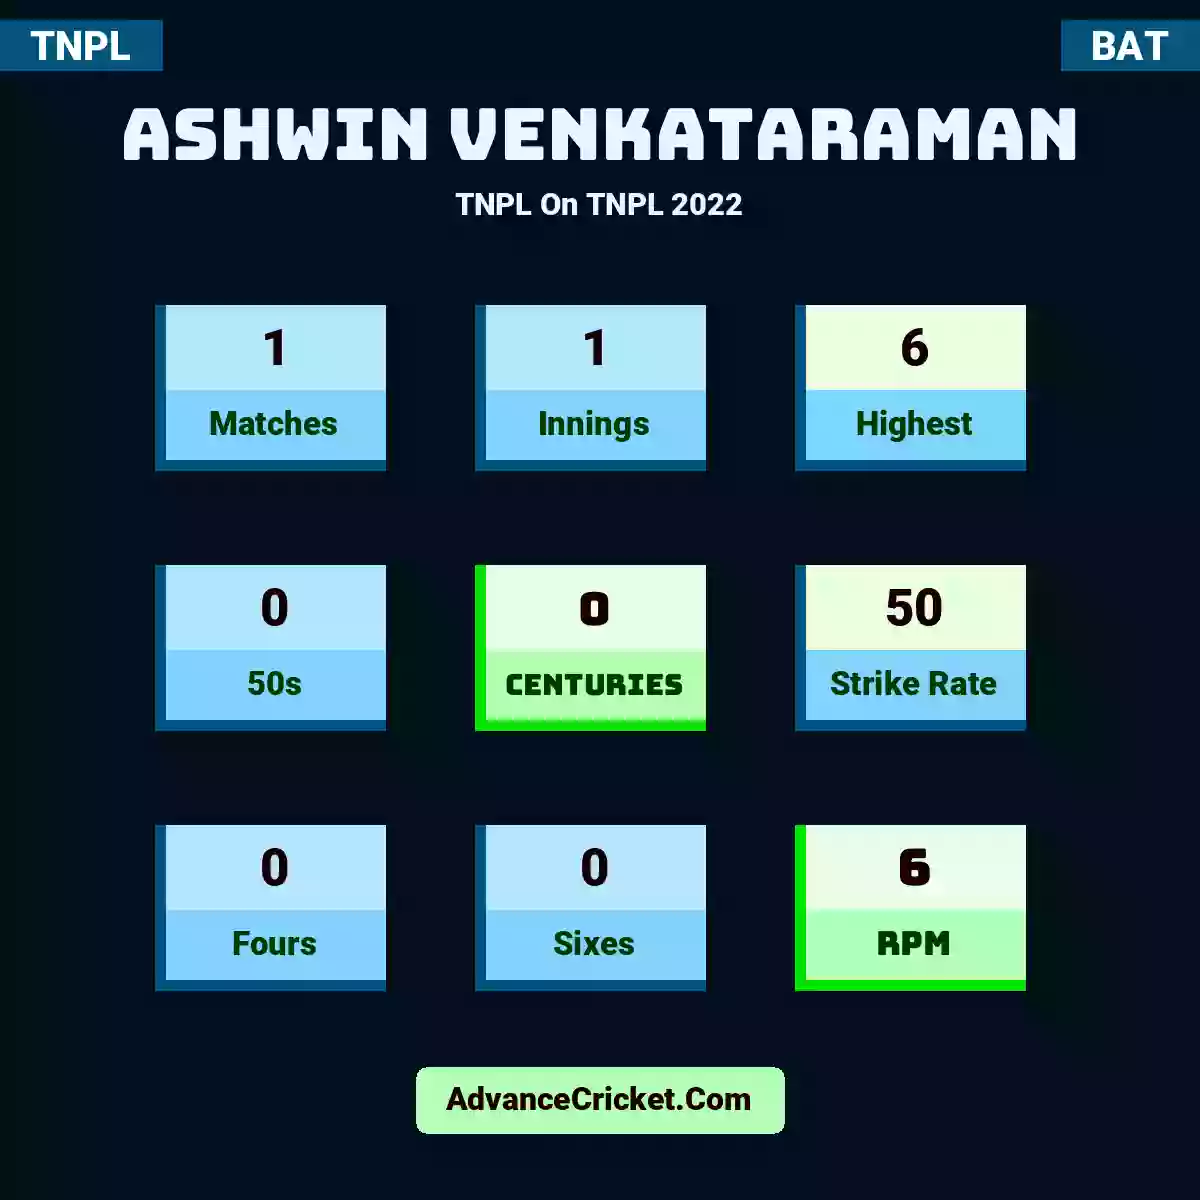 Ashwin Venkataraman TNPL  On TNPL 2022, Ashwin Venkataraman played 1 matches, scored 6 runs as highest, 0 half-centuries, and 0 centuries, with a strike rate of 50. A.Venkataraman hit 0 fours and 0 sixes, with an RPM of 6.